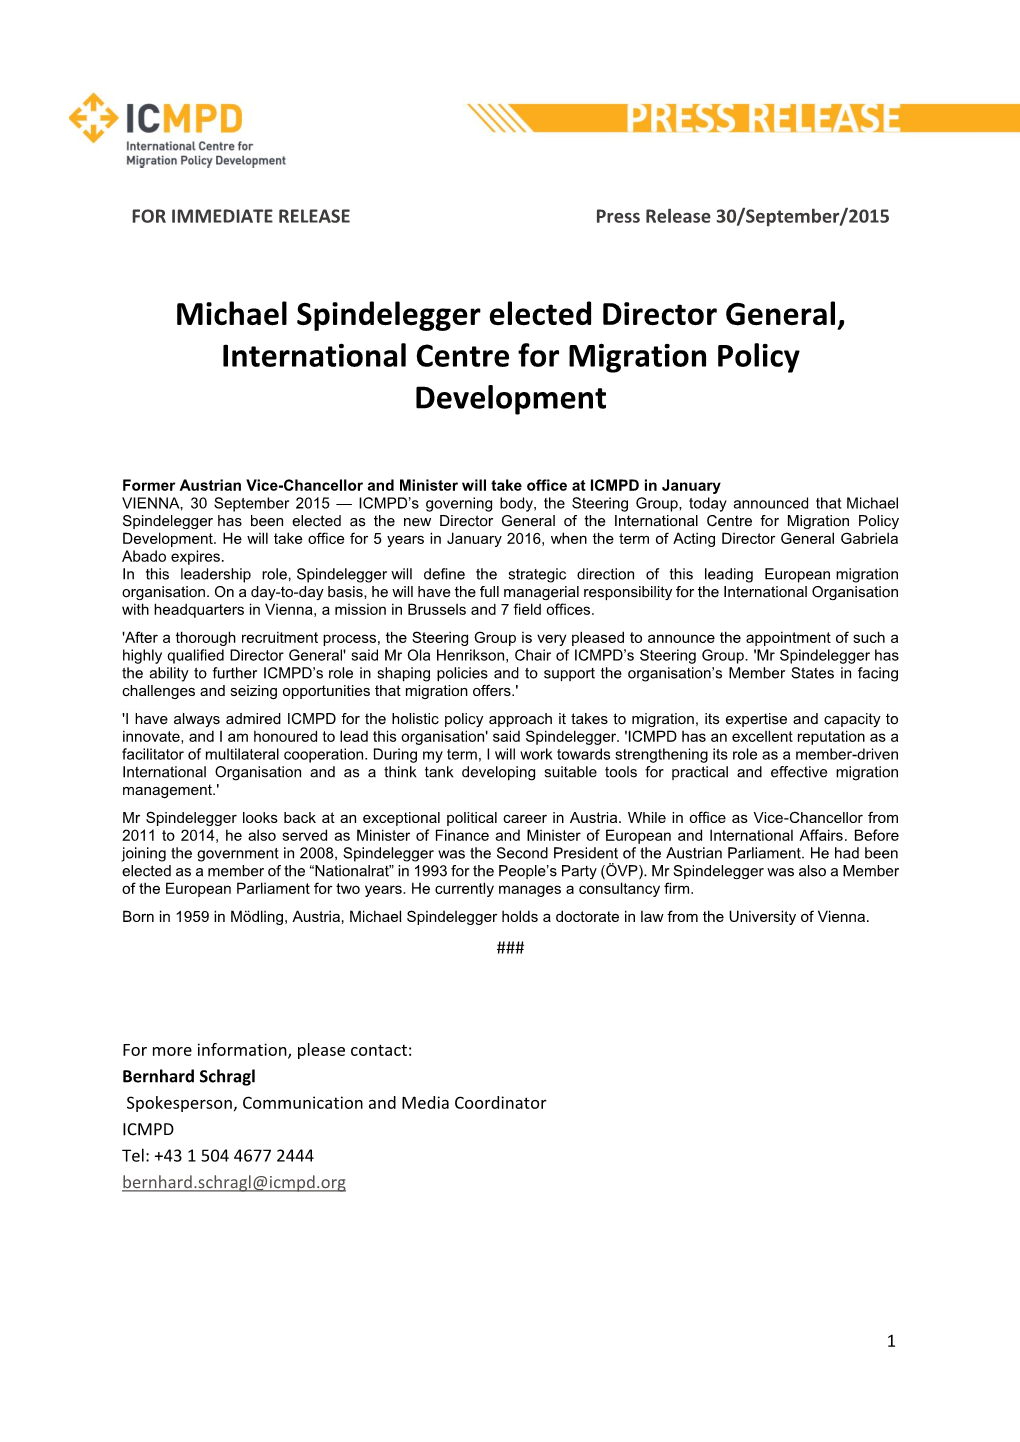 Michael Spindelegger Elected Director General, International Centre for Migration Policy Development